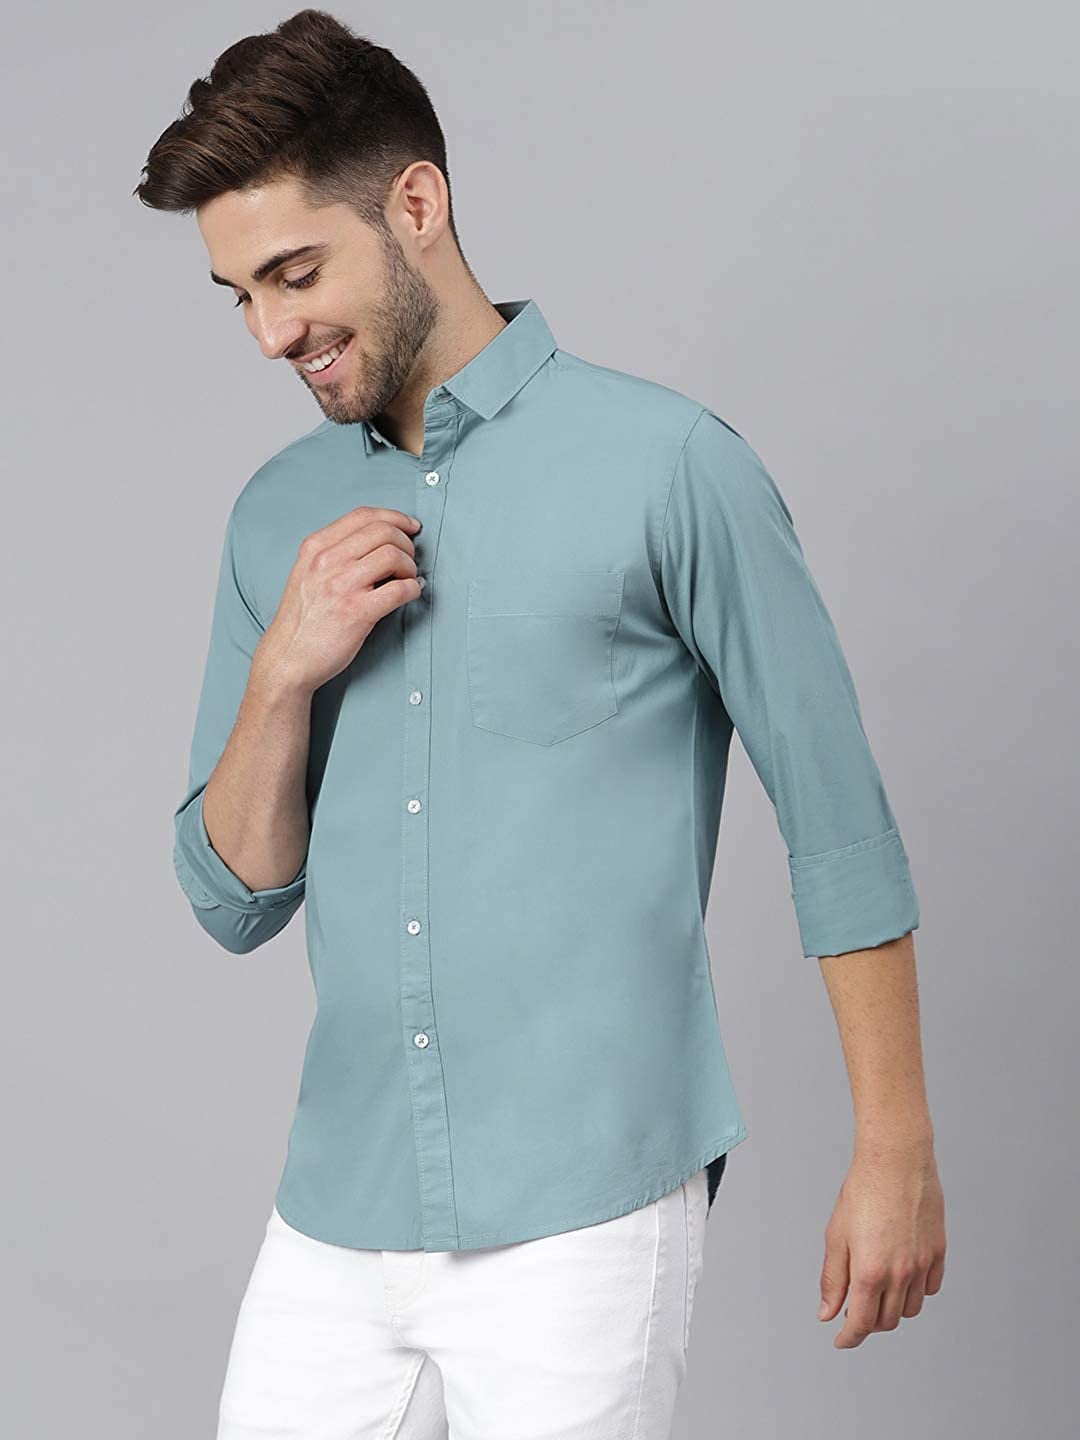 Men Custom Made 100% Cotton Plain Solid Shirt Beach Summer | Etsy